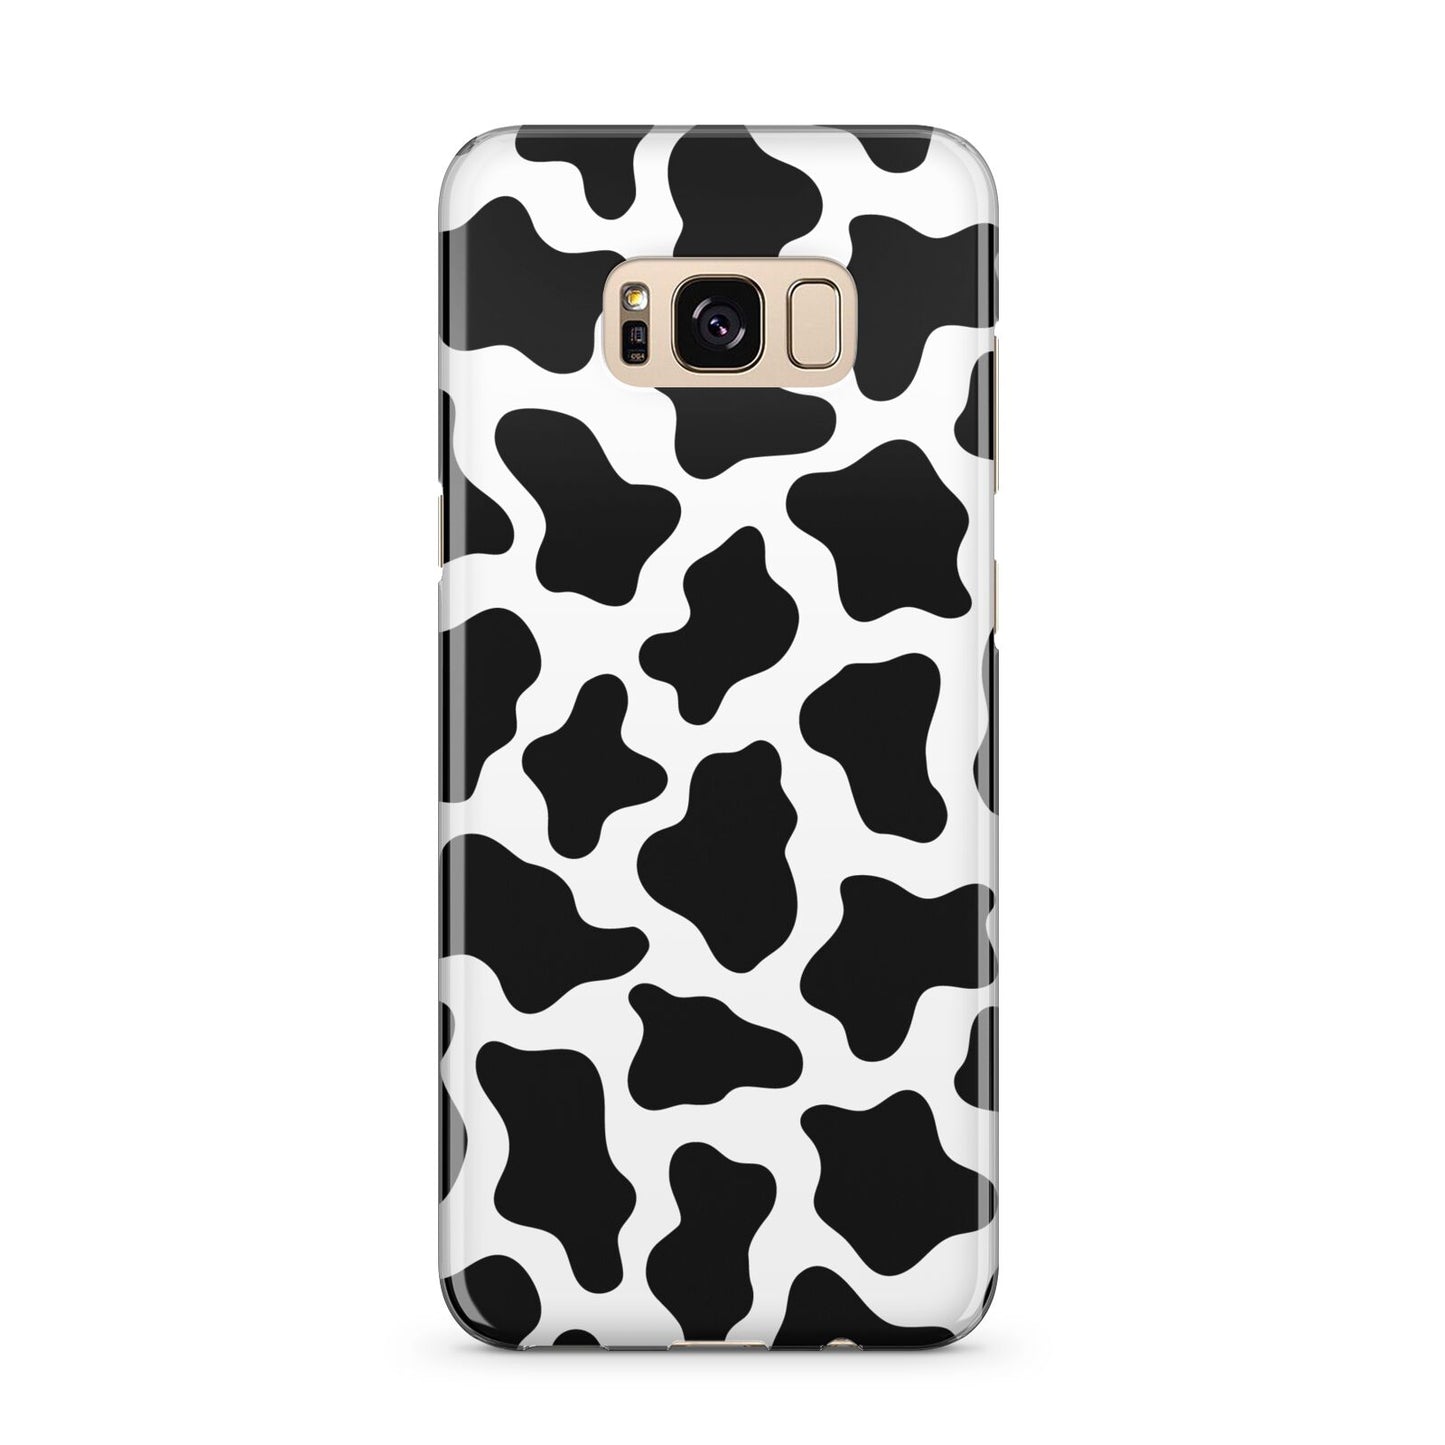 Cow Print Samsung Galaxy S8 Plus Case